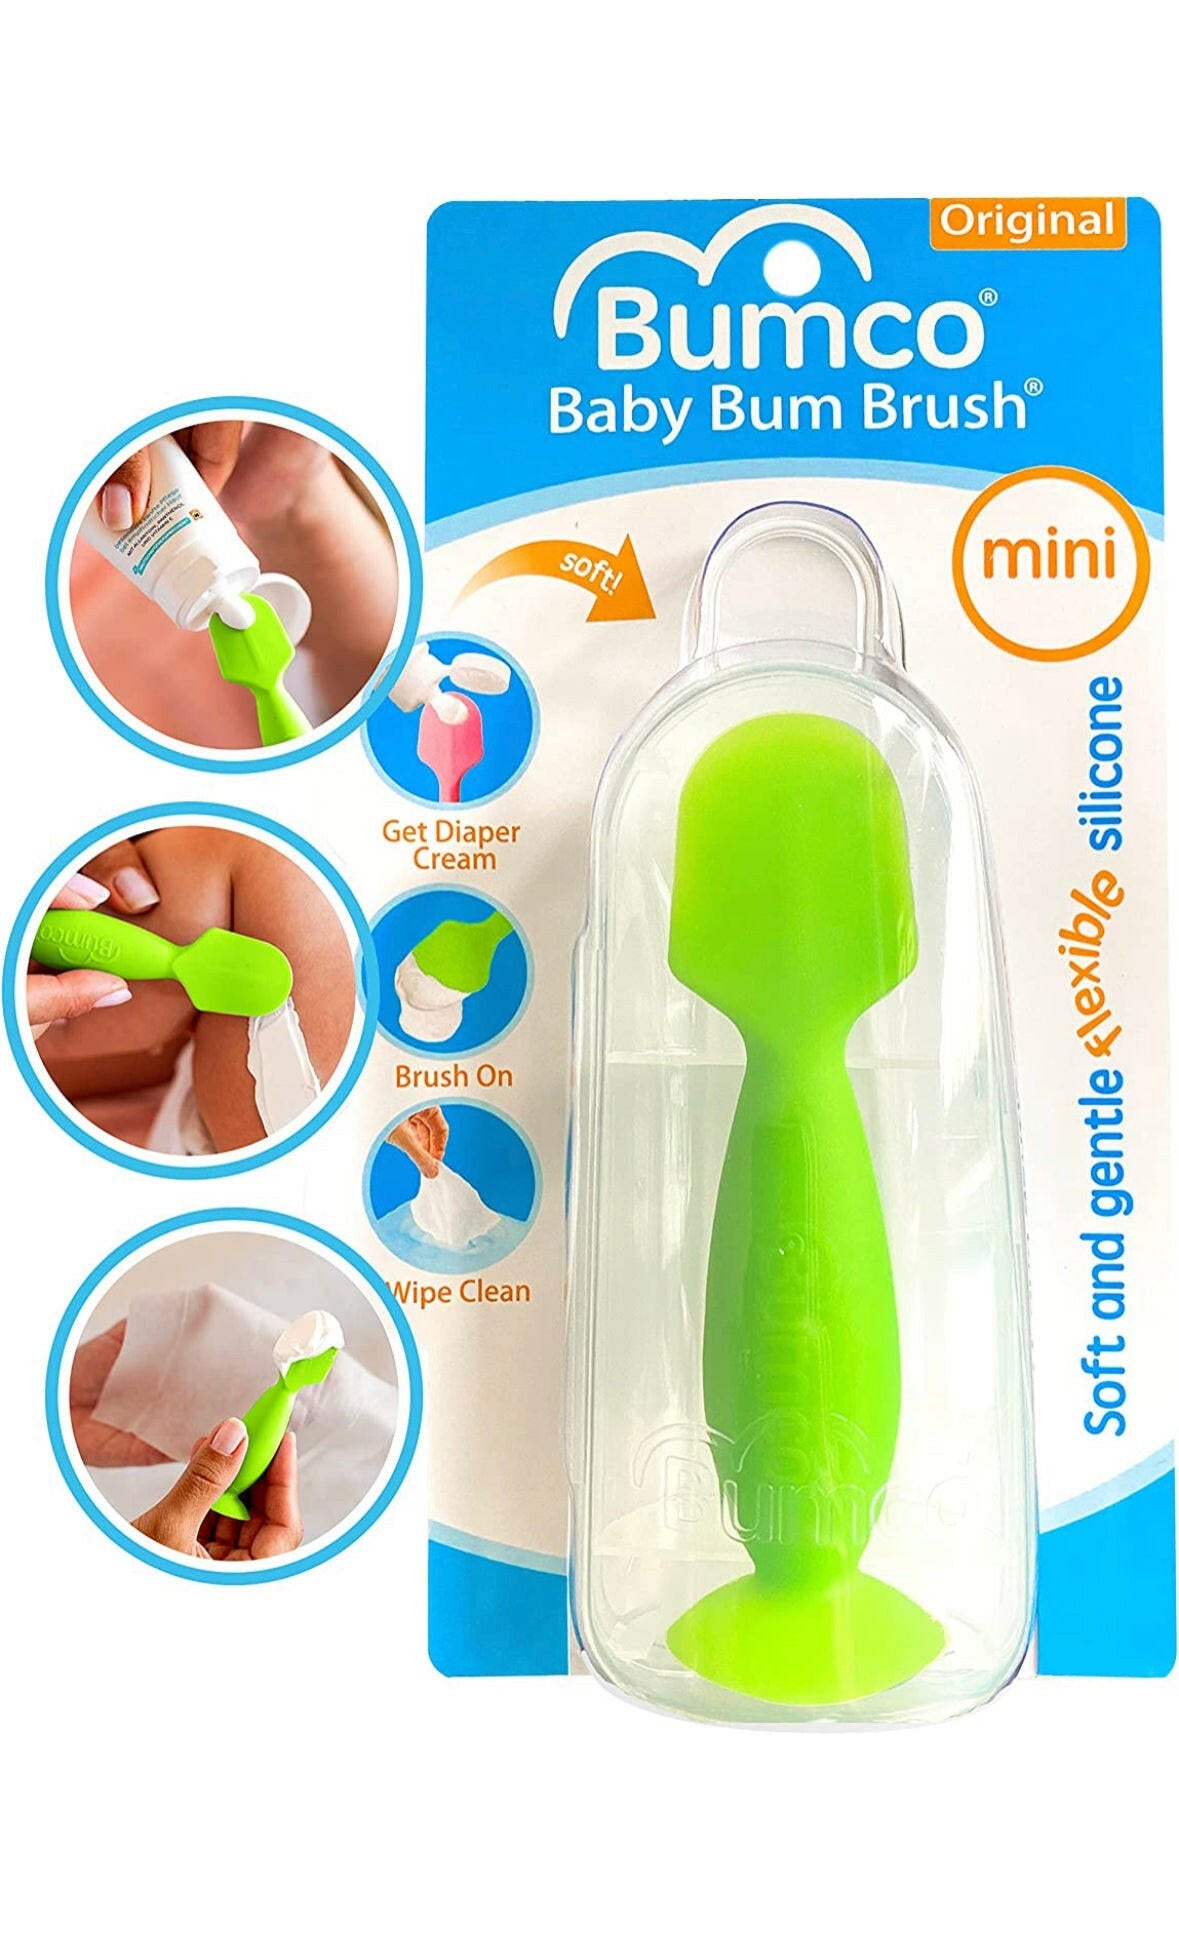 Mini Baby Bum Brush with Travel Case.